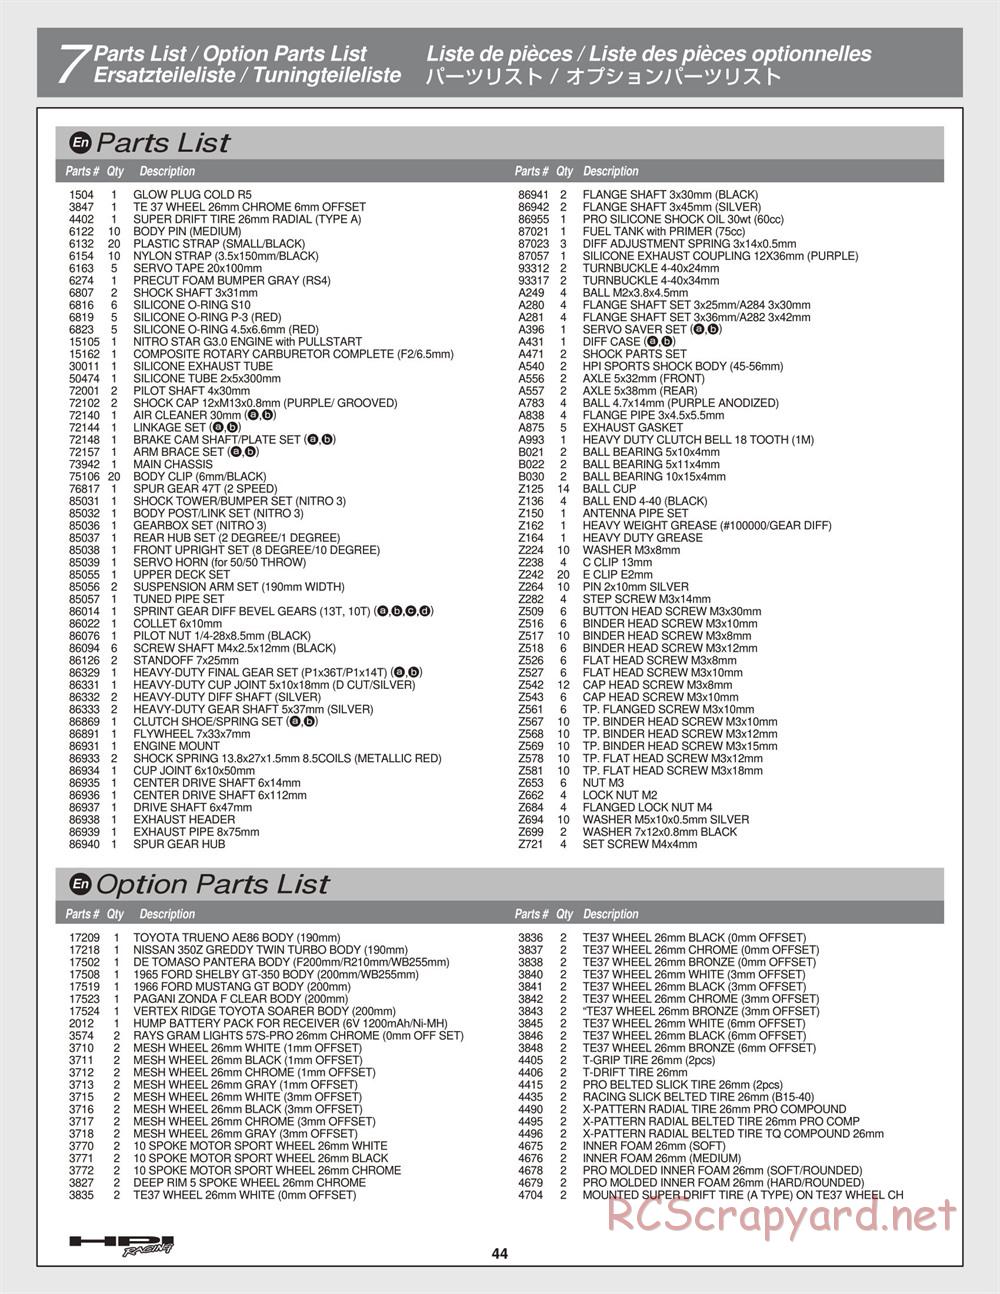 HPI - Nitro RS4 3 Drift - Manual - Page 44